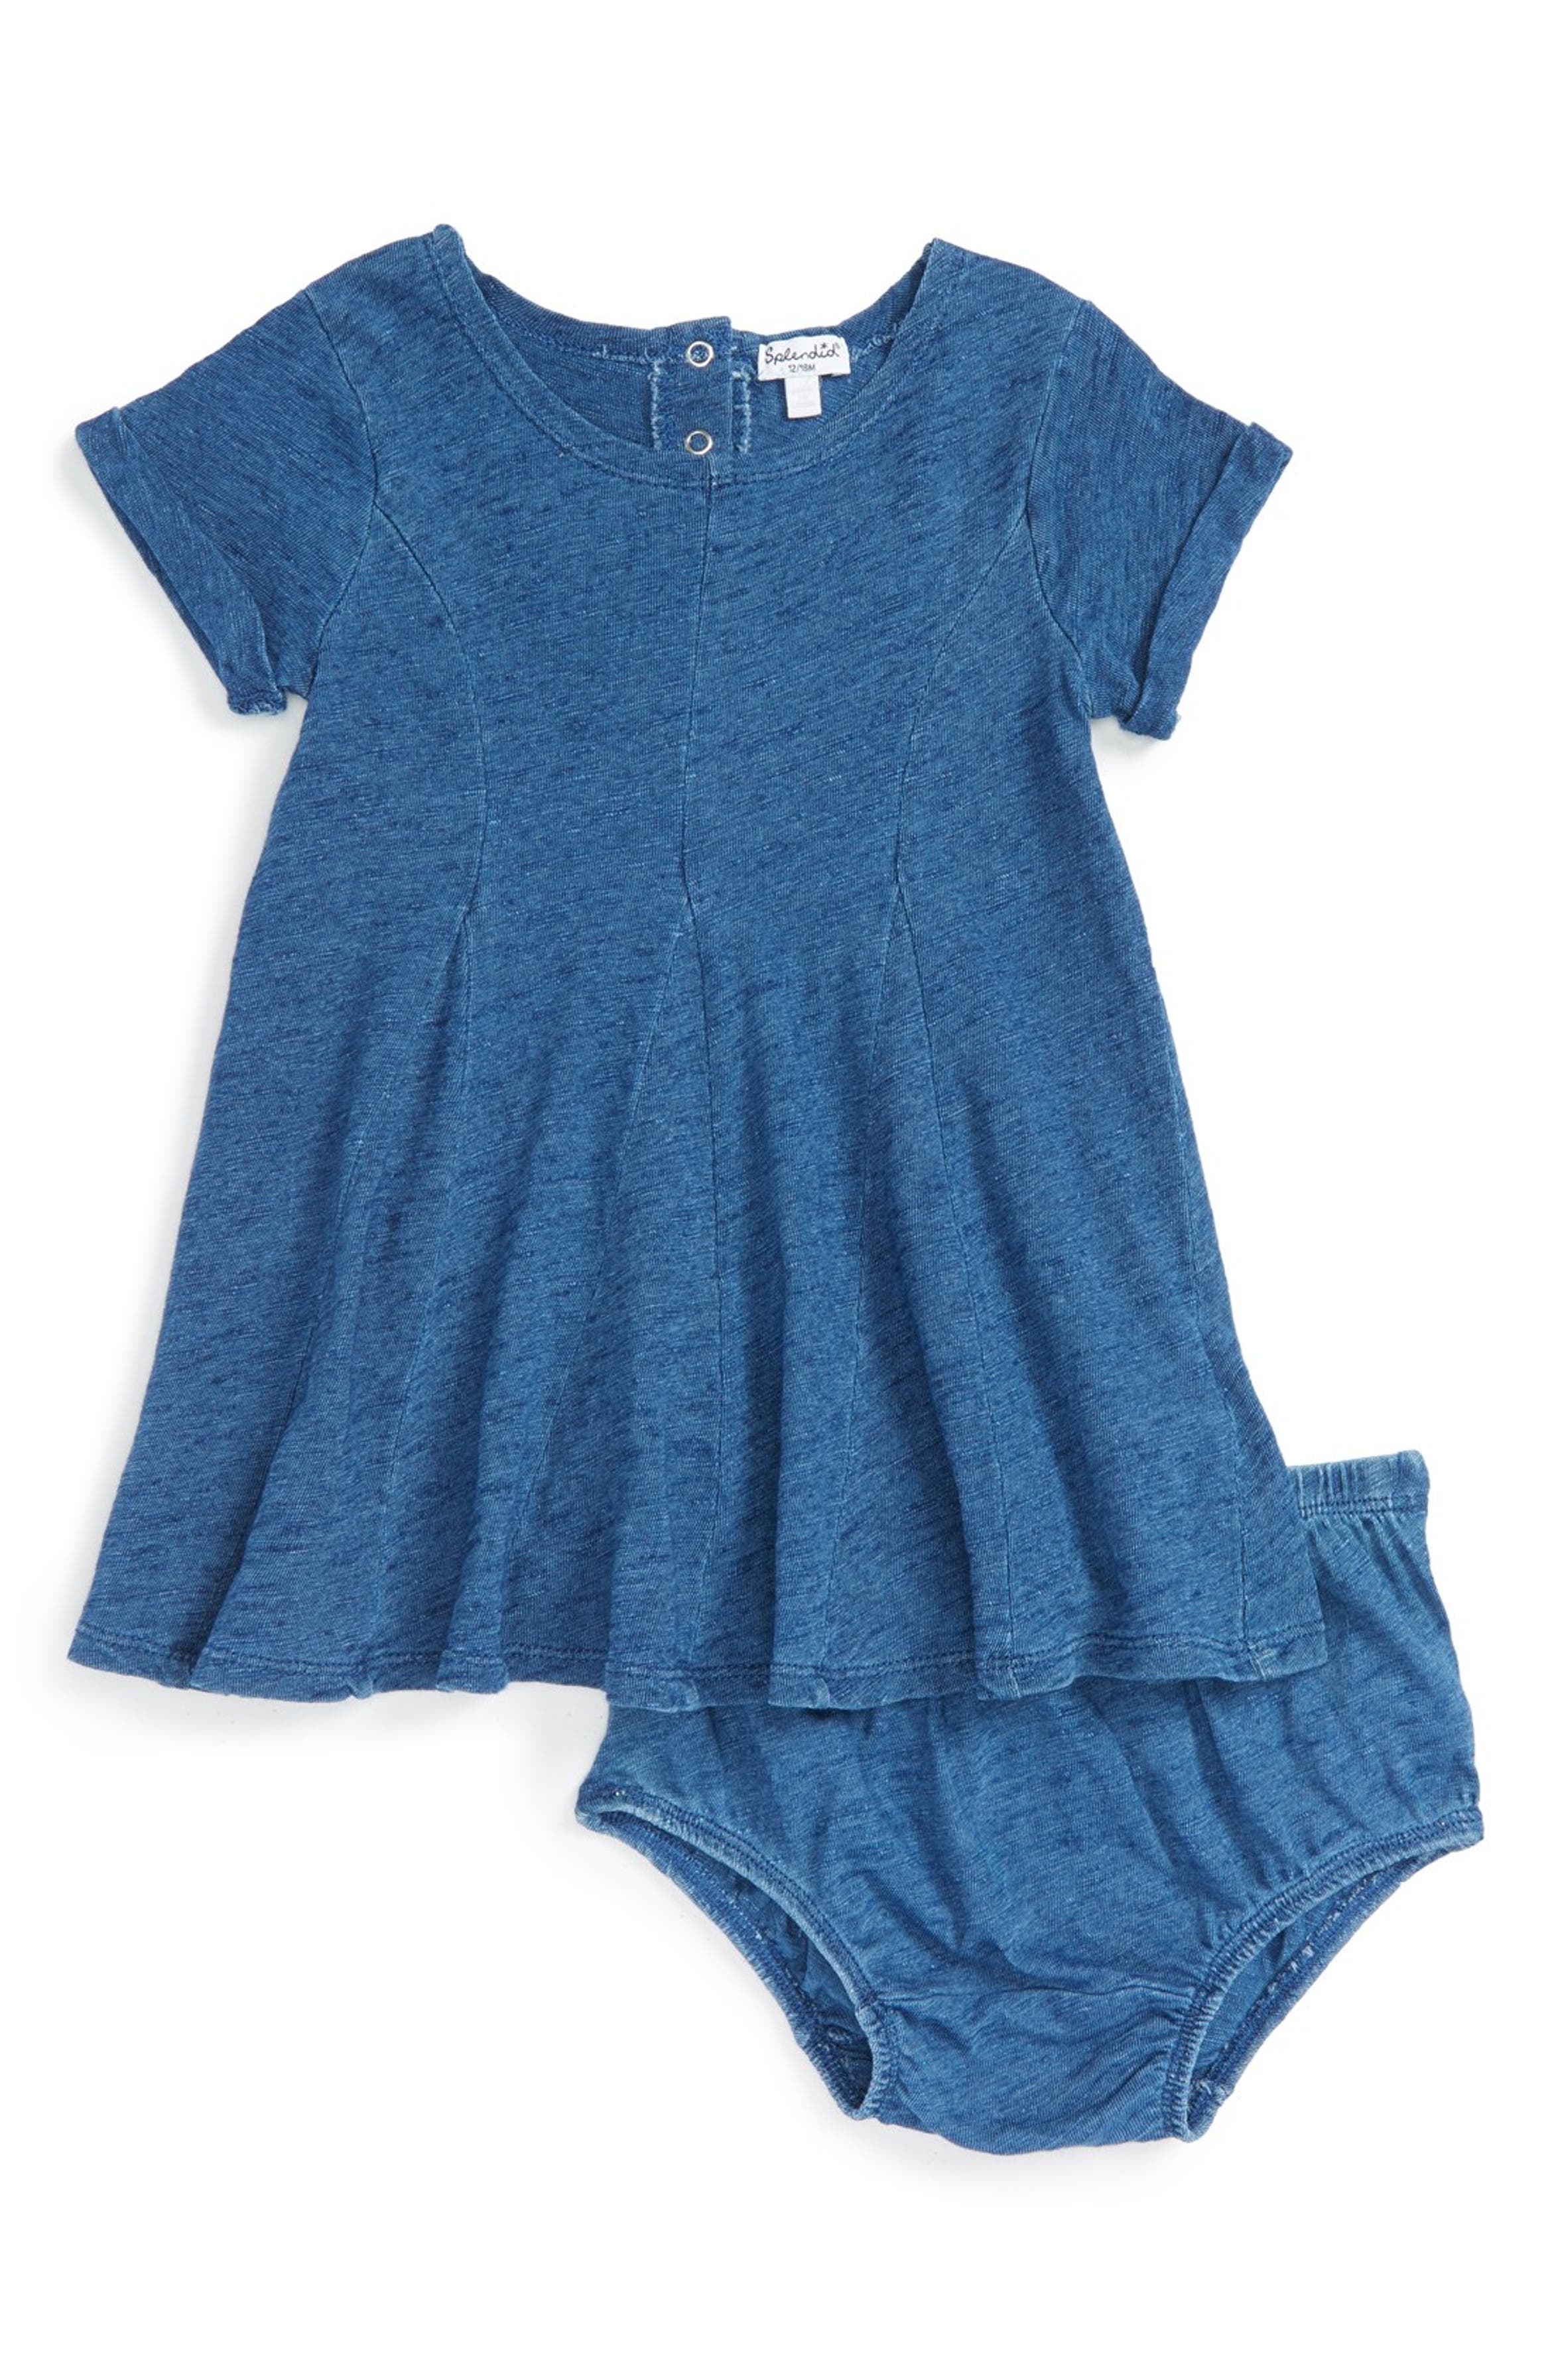 Splendid Indigo Dyed Dress (Baby Girls) | Nordstrom